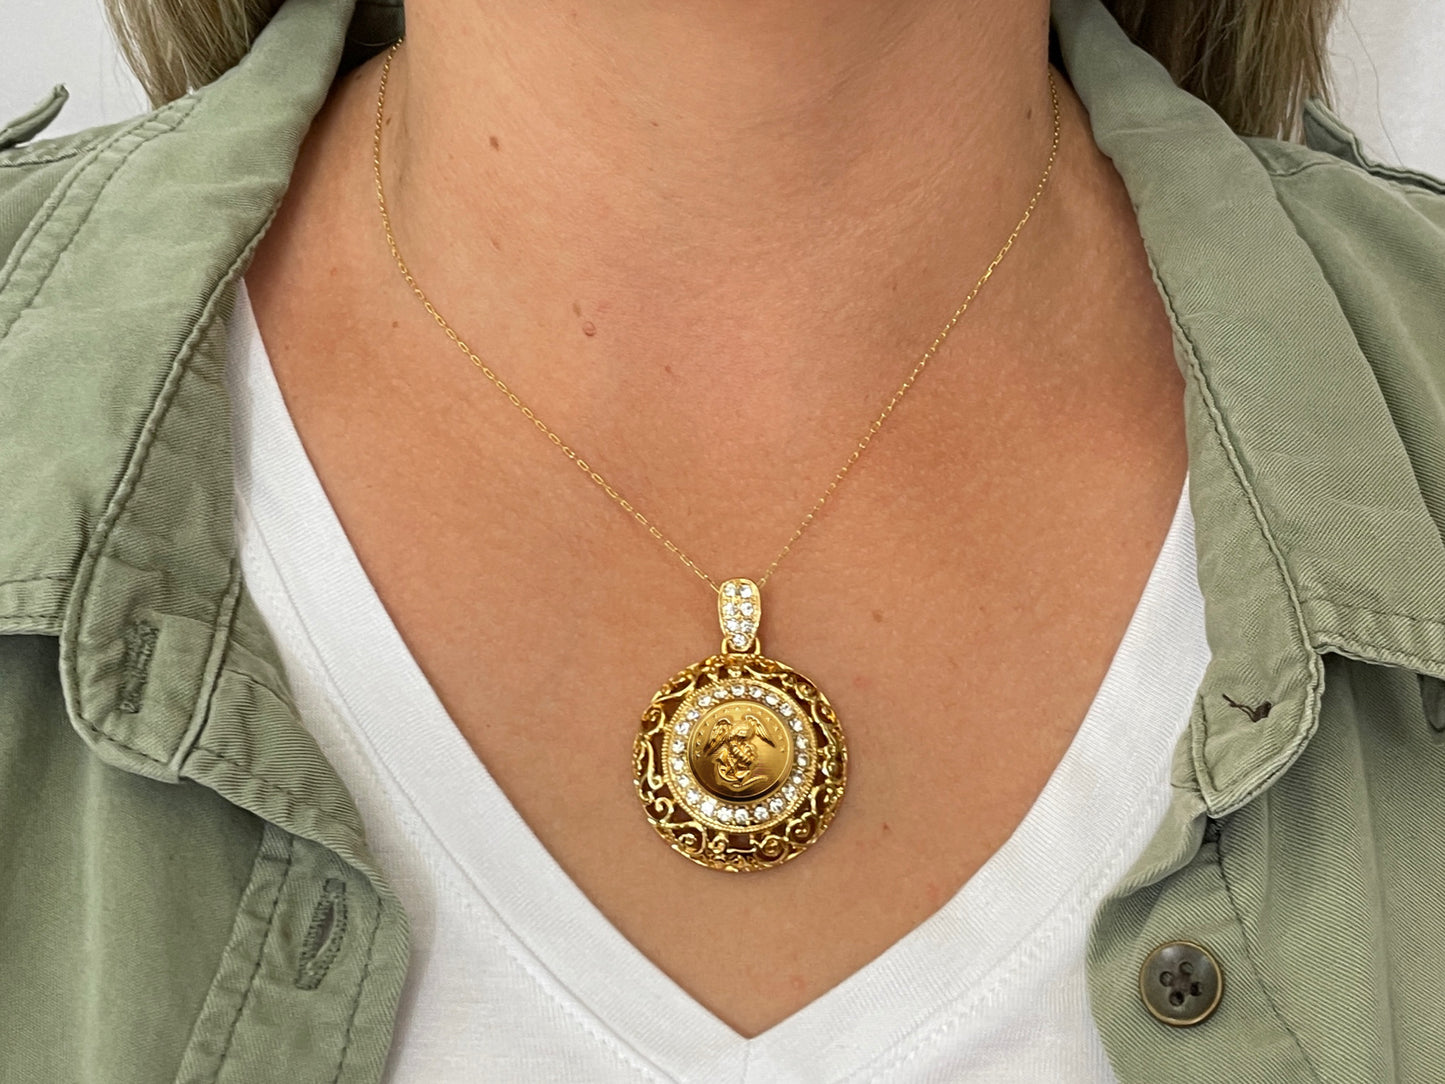 Marine Corps Button Necklace - Large Gold Rhinestone Pendant